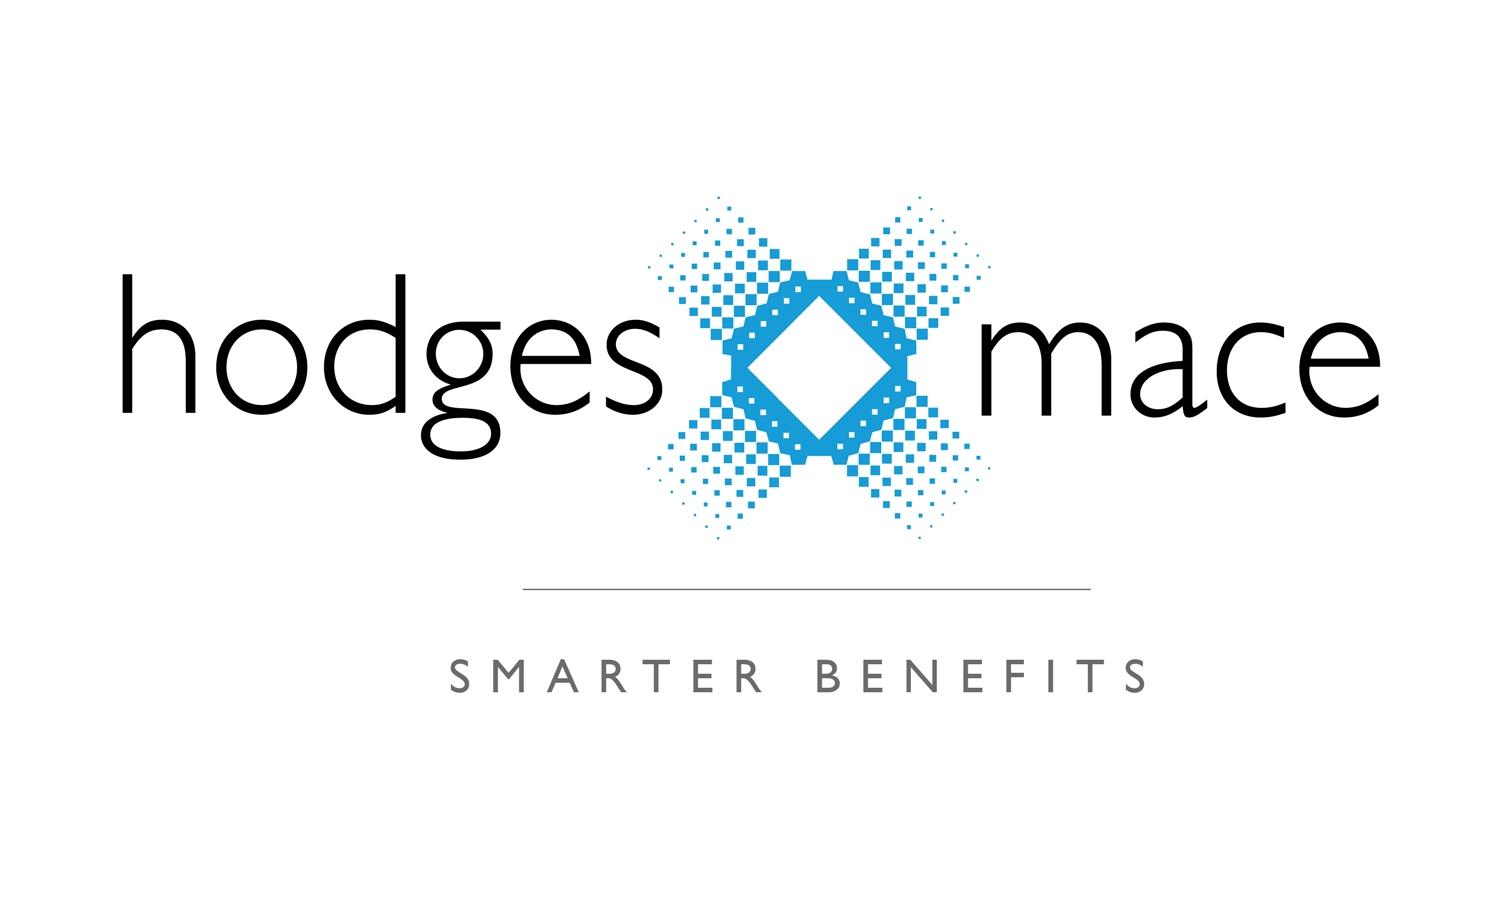 Mace Logo - Hodges-Mace: Smarter Benefits